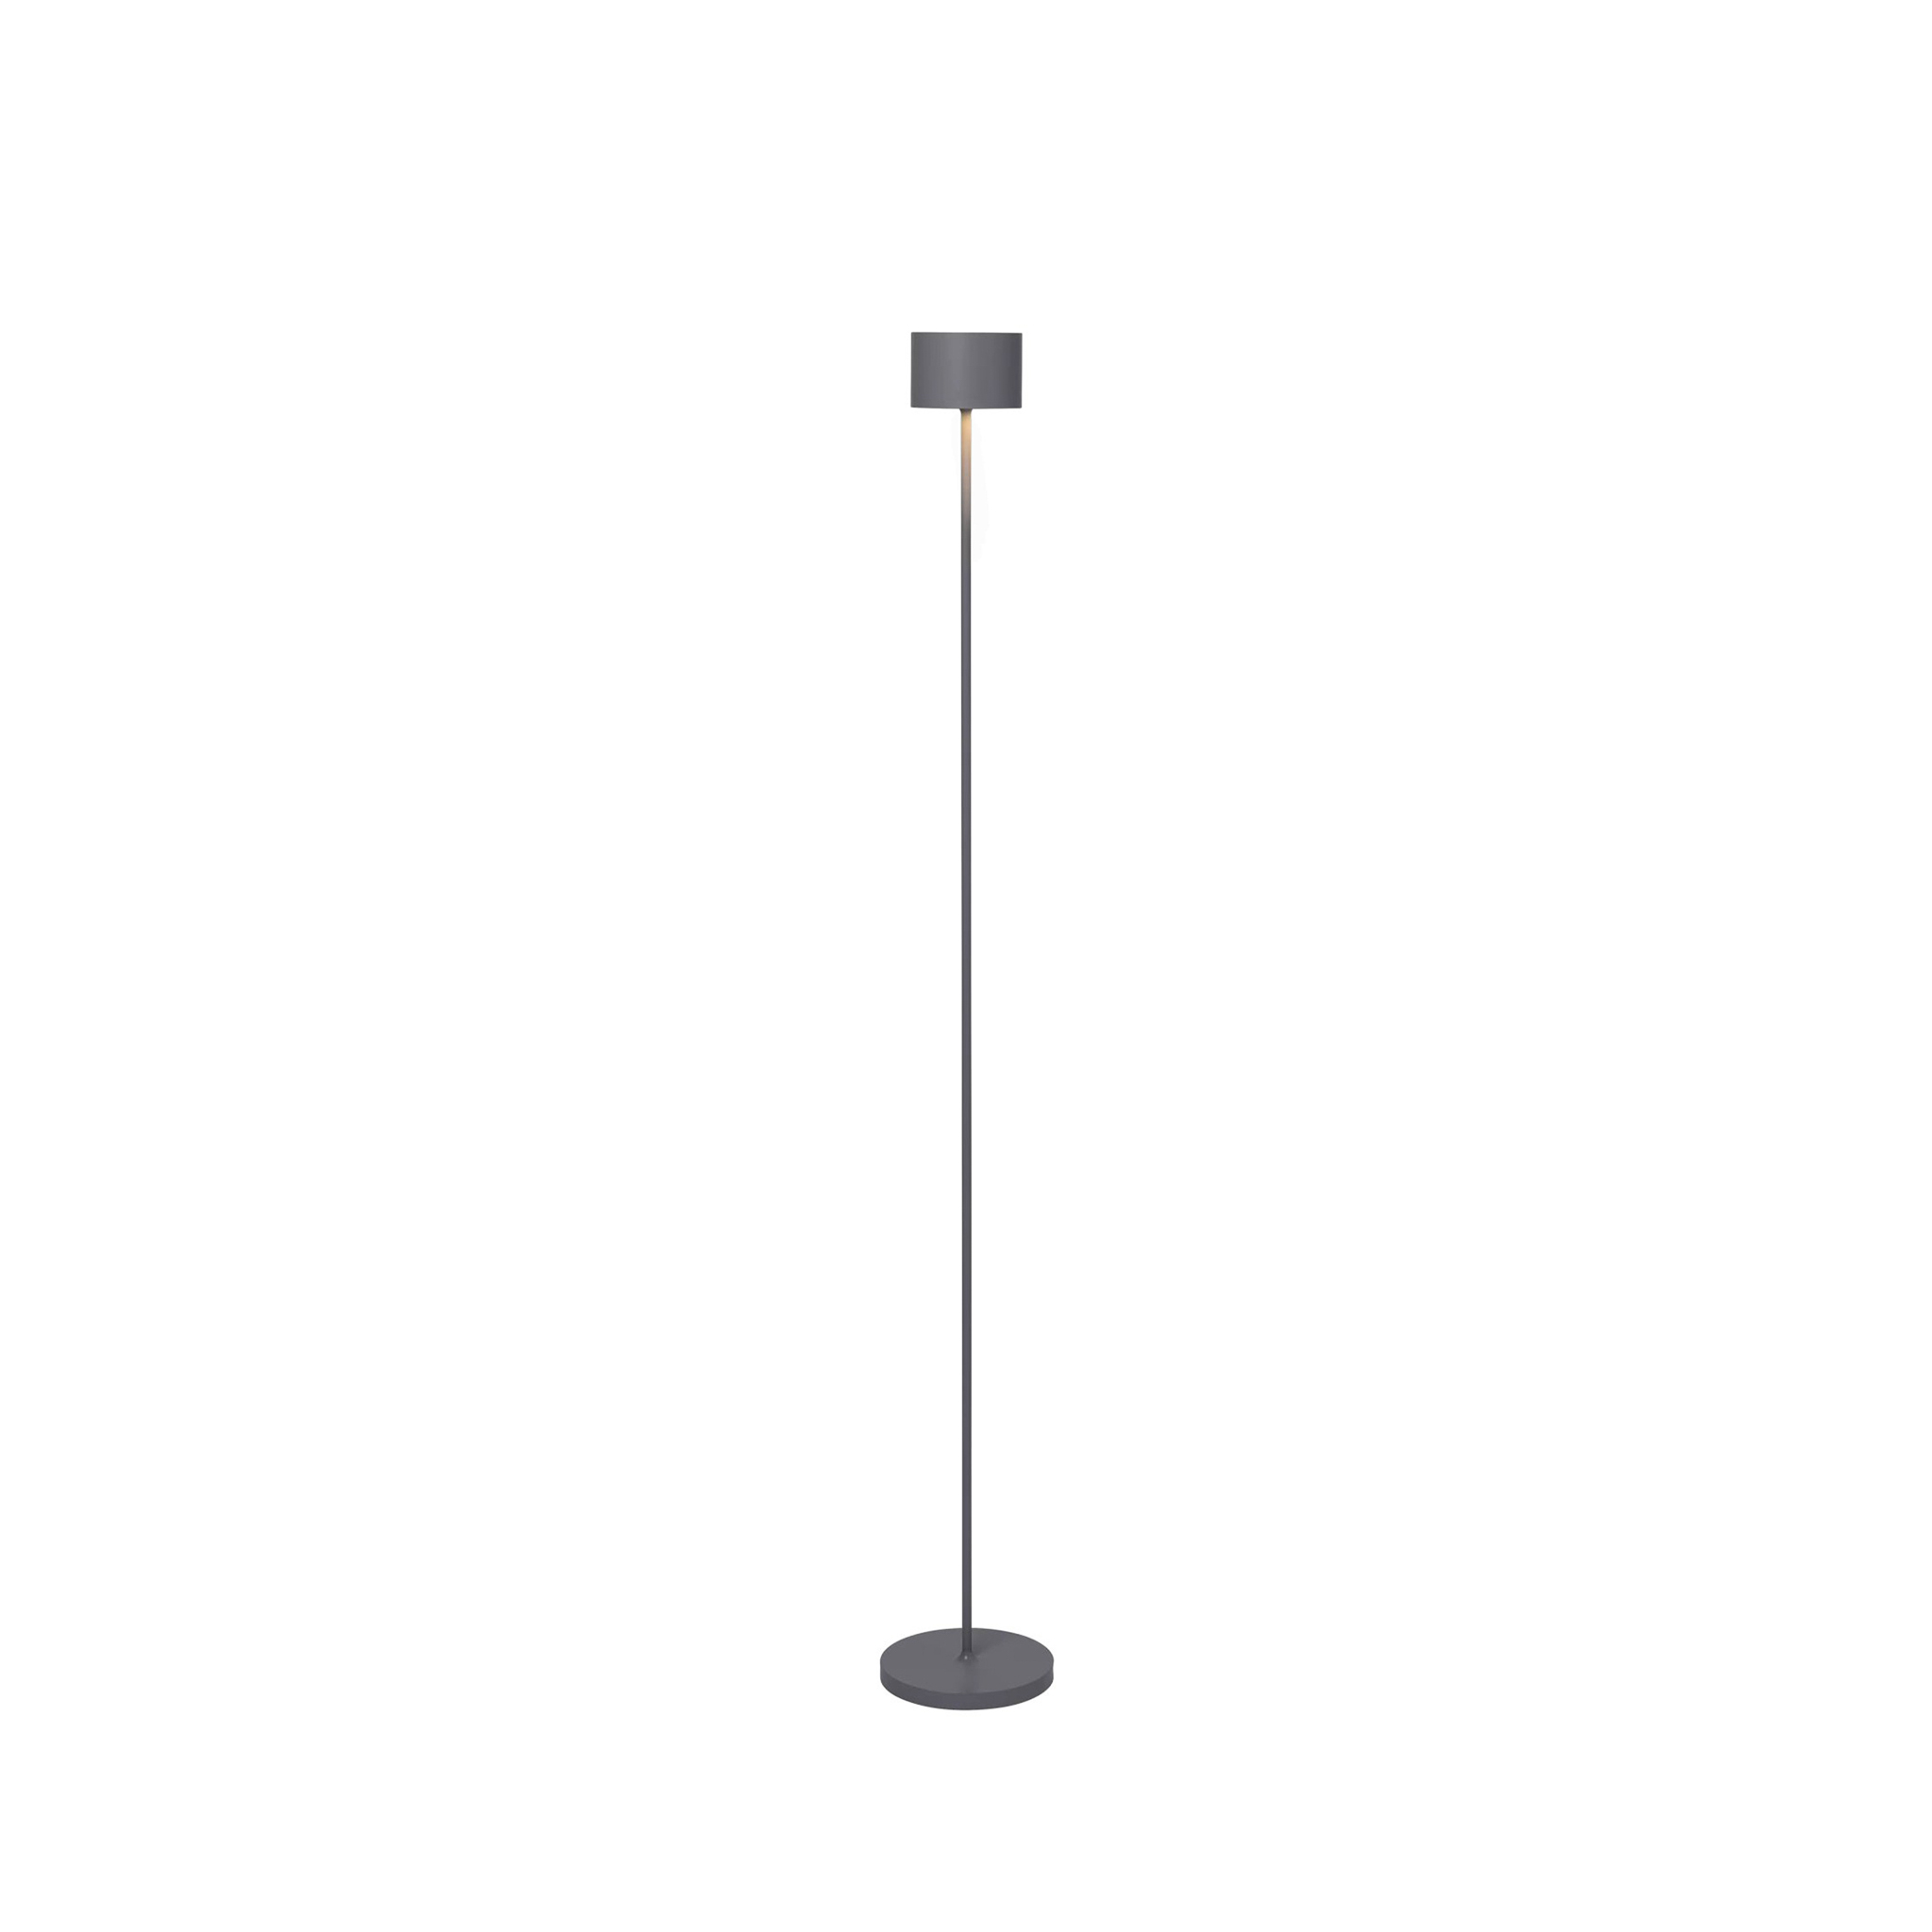 BLOMUS // FAROL - MOBILE LED FLOOR LAMP | WARM GRAY